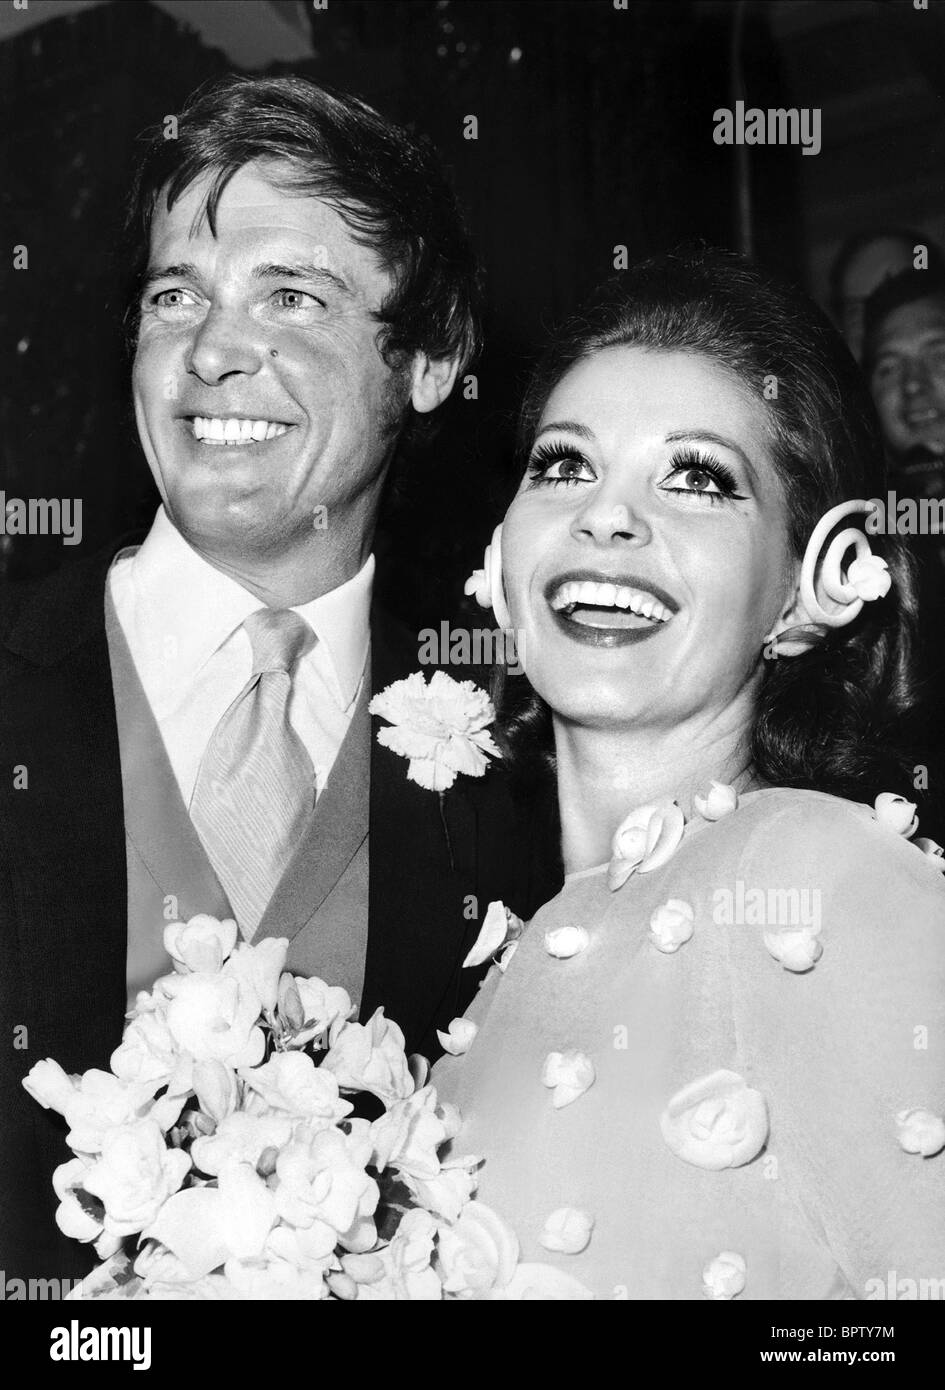 roger-moore-luisa-mattioli-at-their-wedding-1969-BPTY7M.jpg